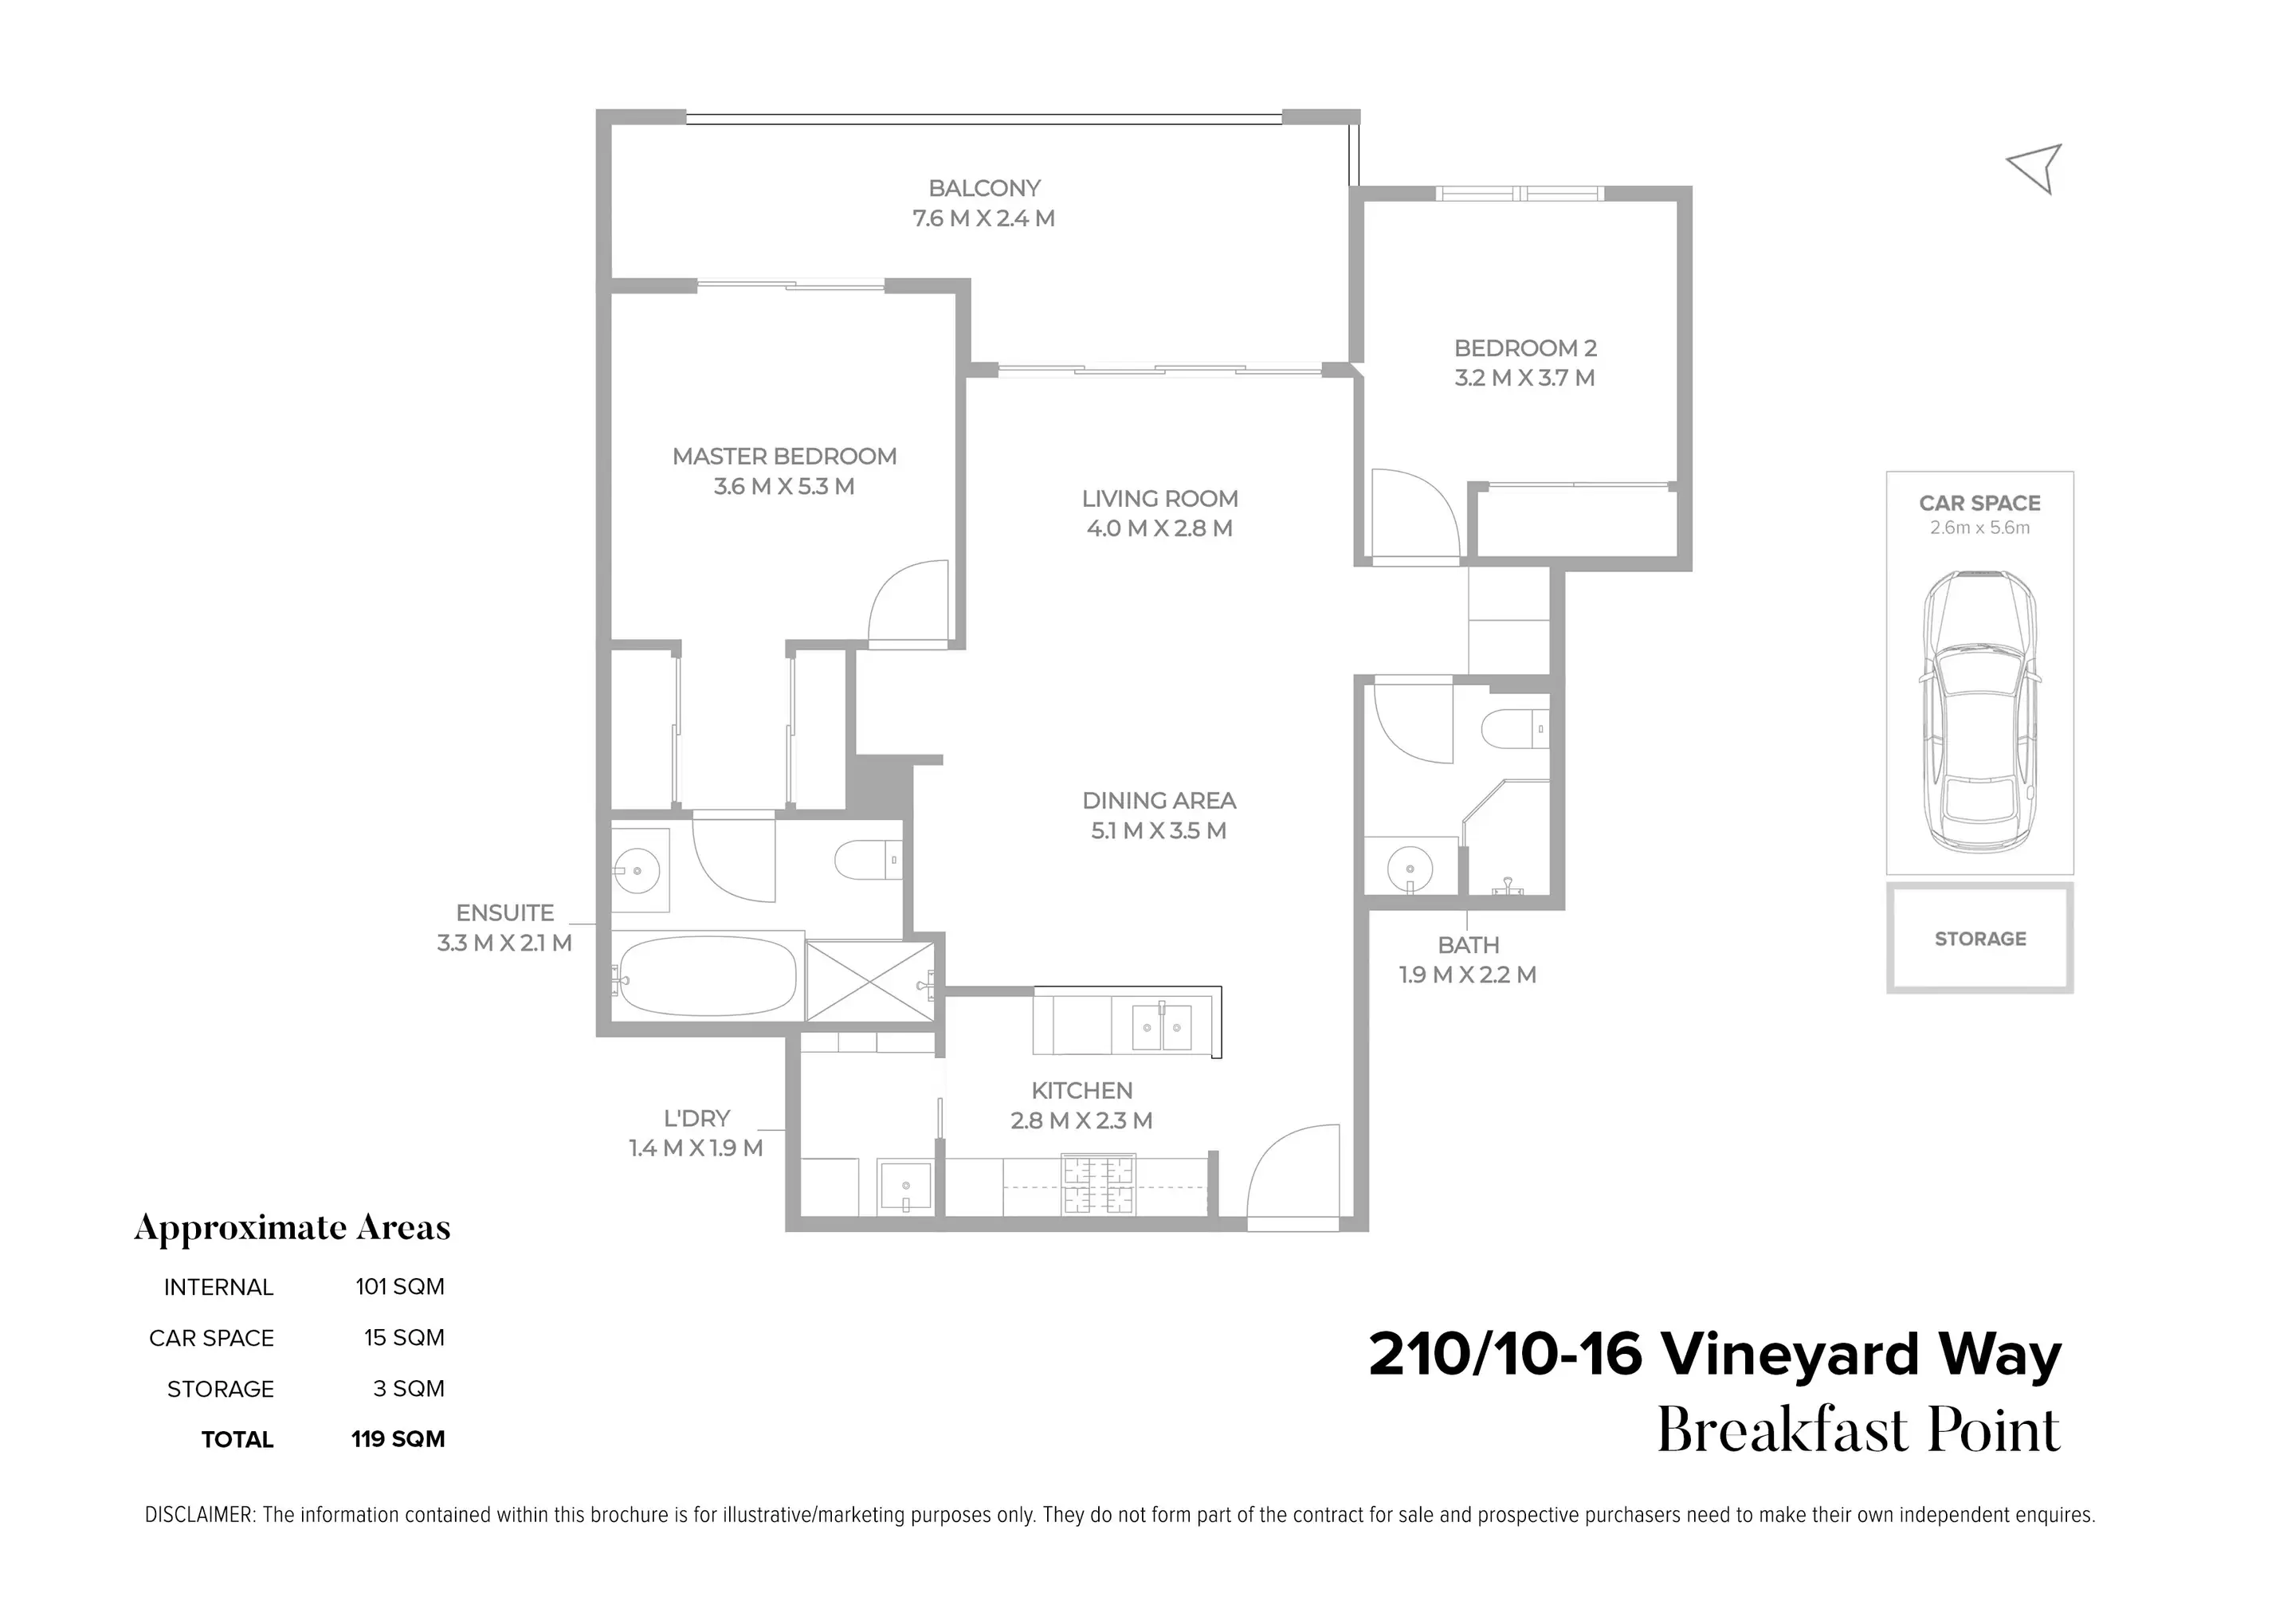 210/10-16 Vineyard Way, Breakfast Point For Sale by Chidiac Realty - floorplan